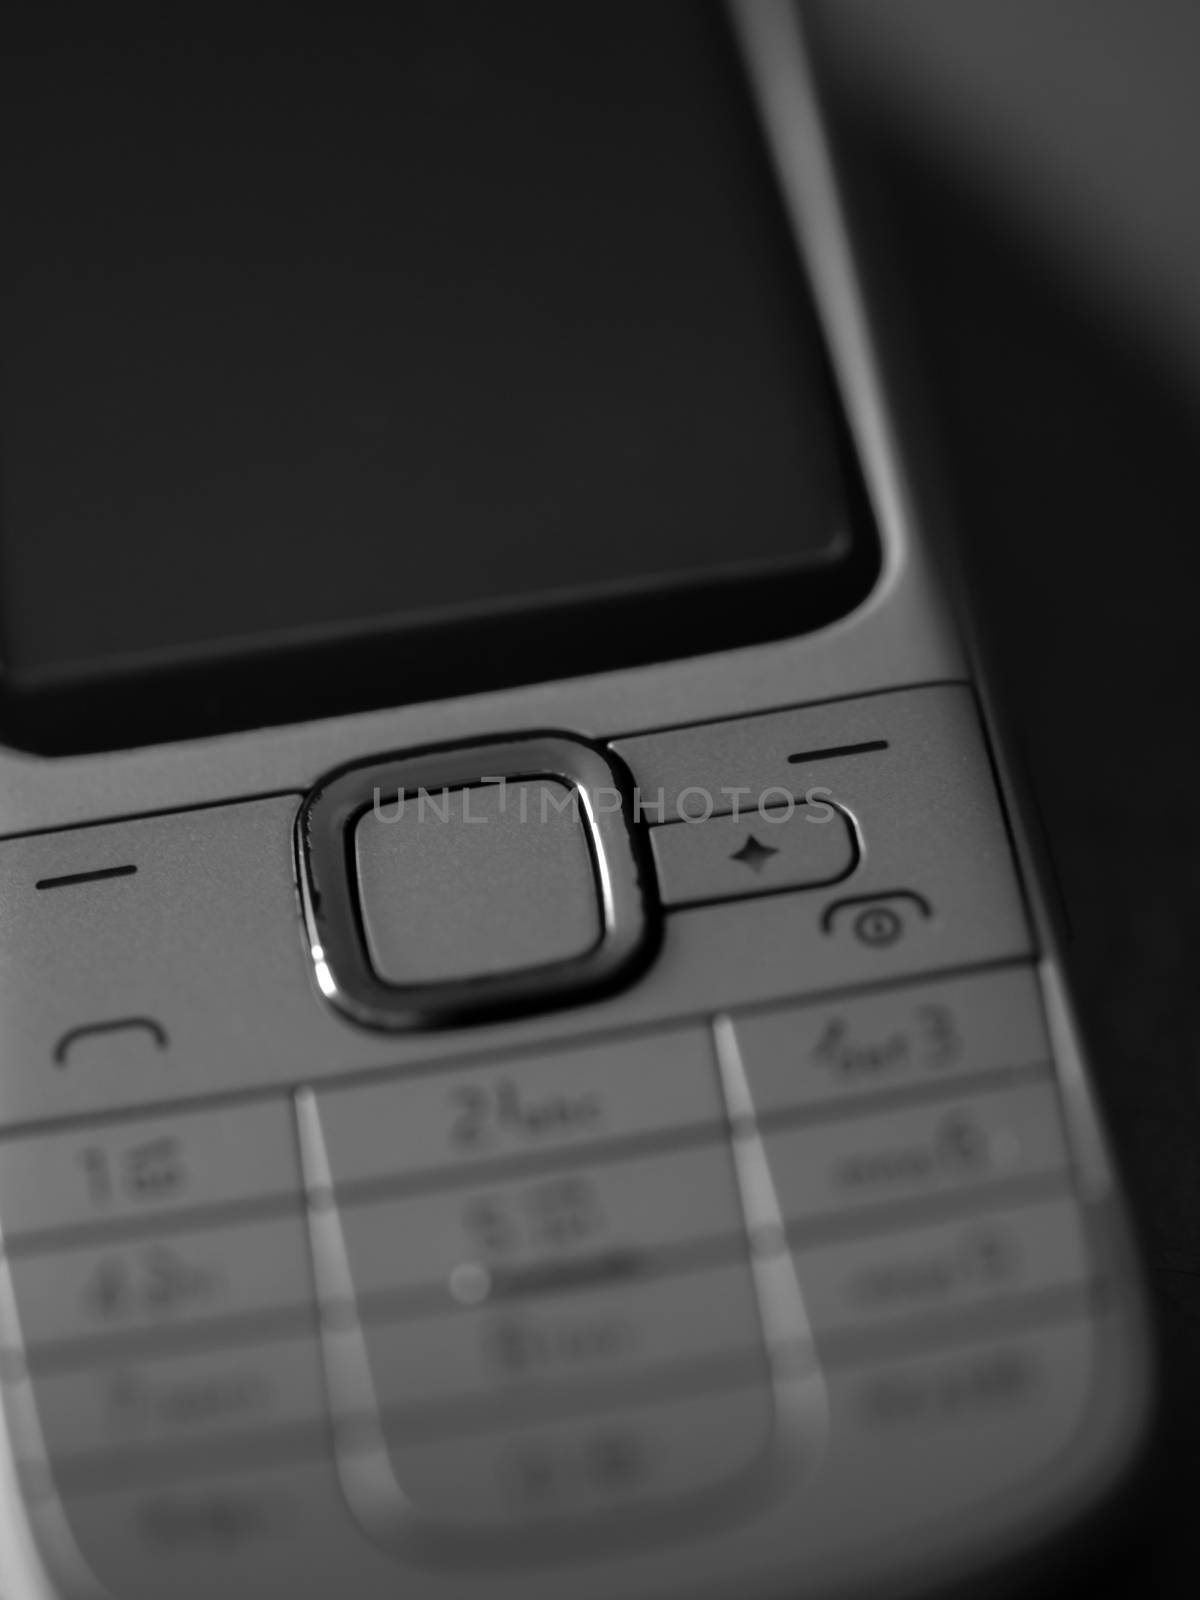 MOBILE PHONE KEYPAD by PrettyTG